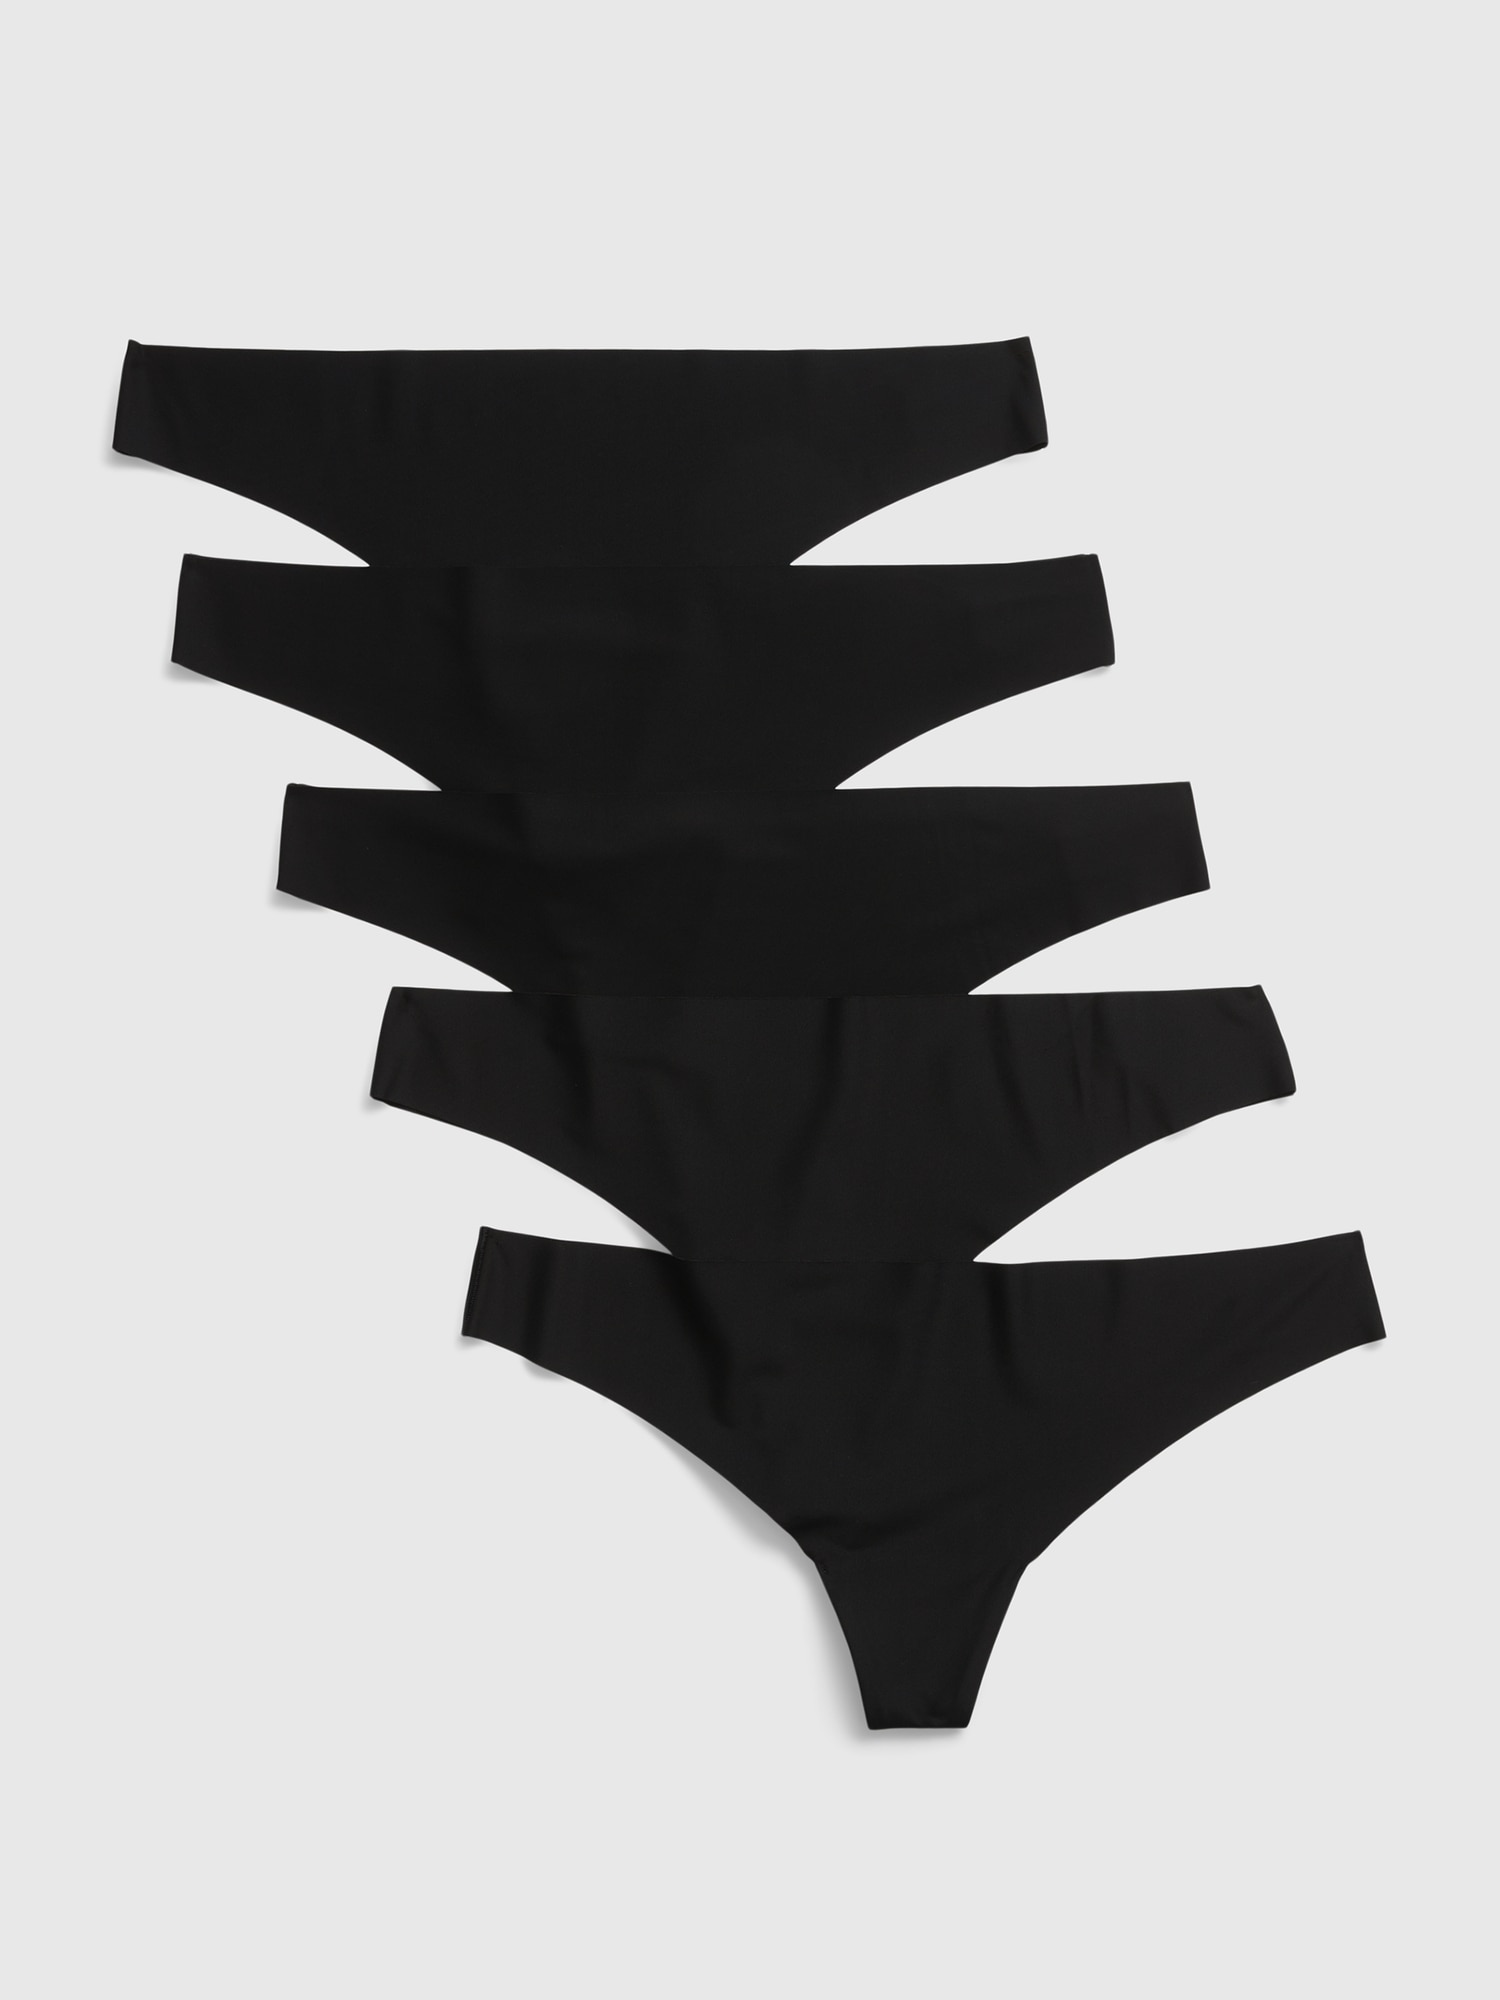  GKICG Thongs for Women Pack, No Show Underwear Sexy